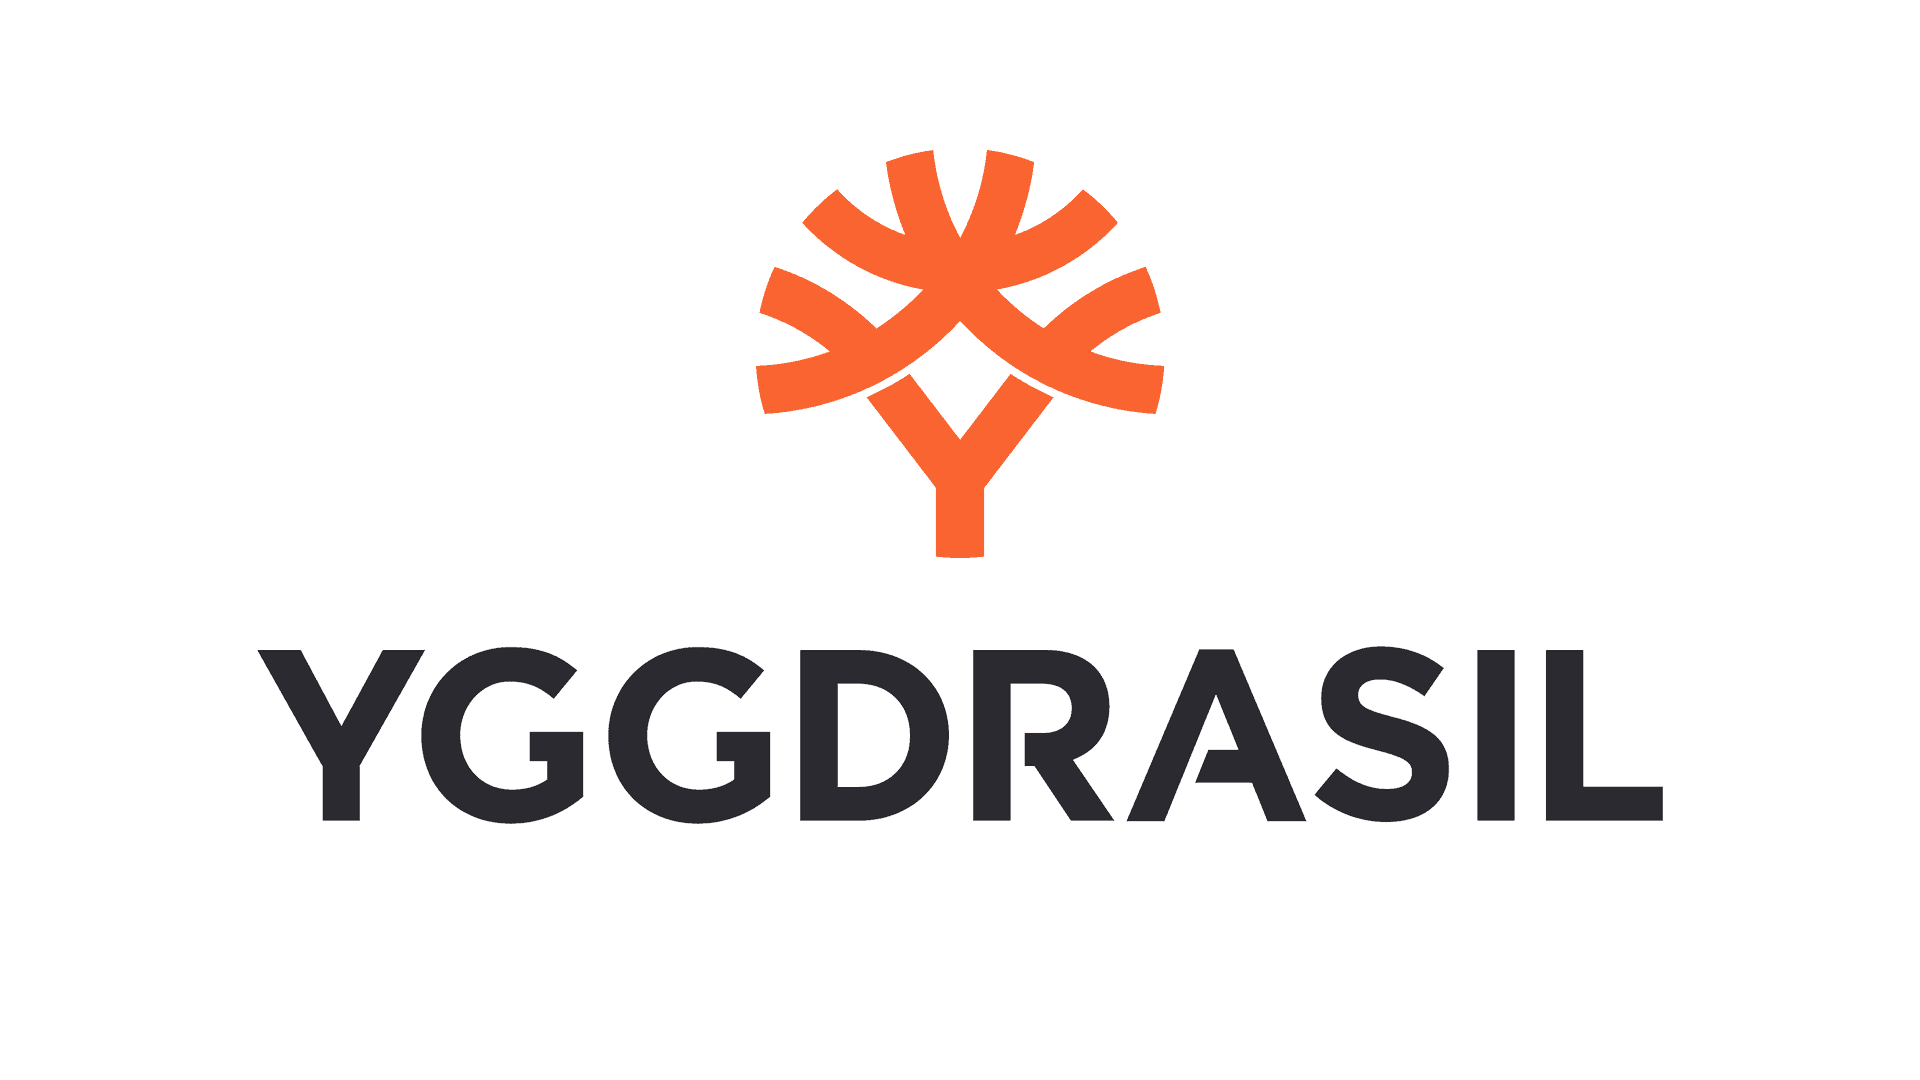 yggdrasil rebrand logo full dark